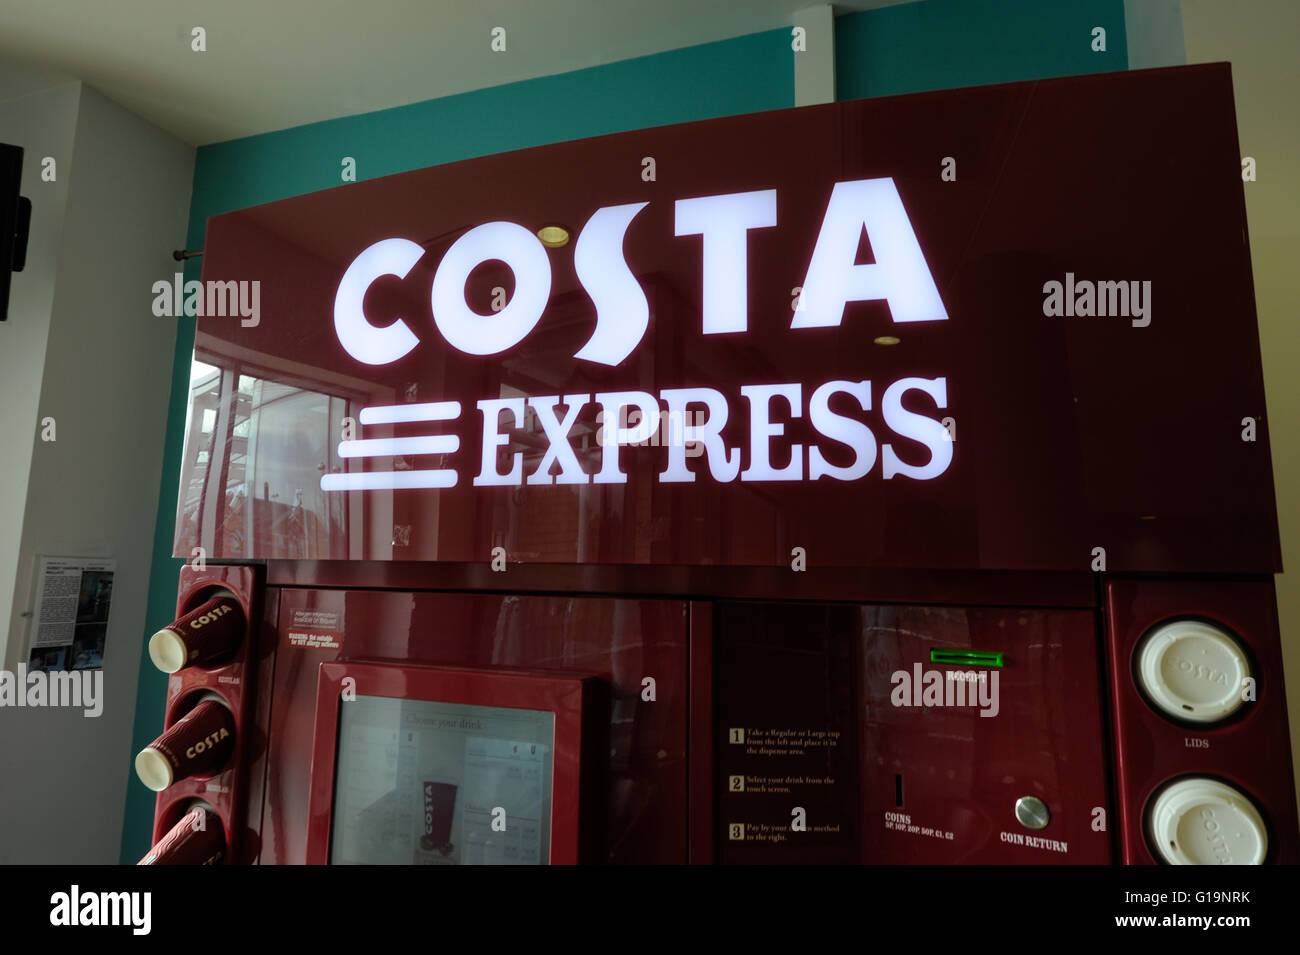 costa express machine Stock Photo